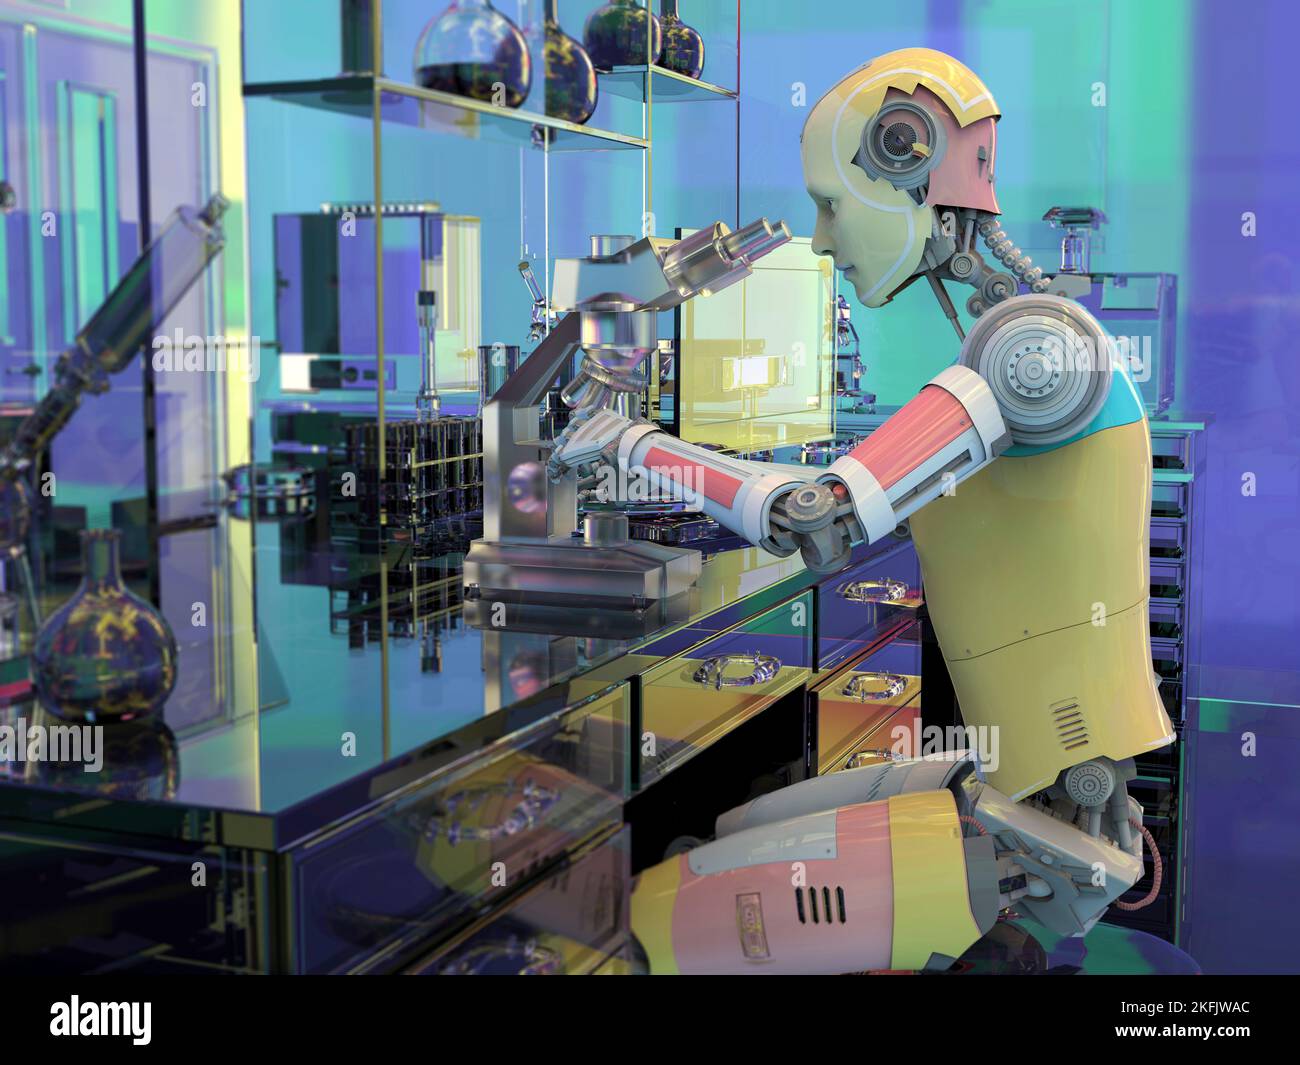 Humanoid robot working with microscope, illustration Stock Photo